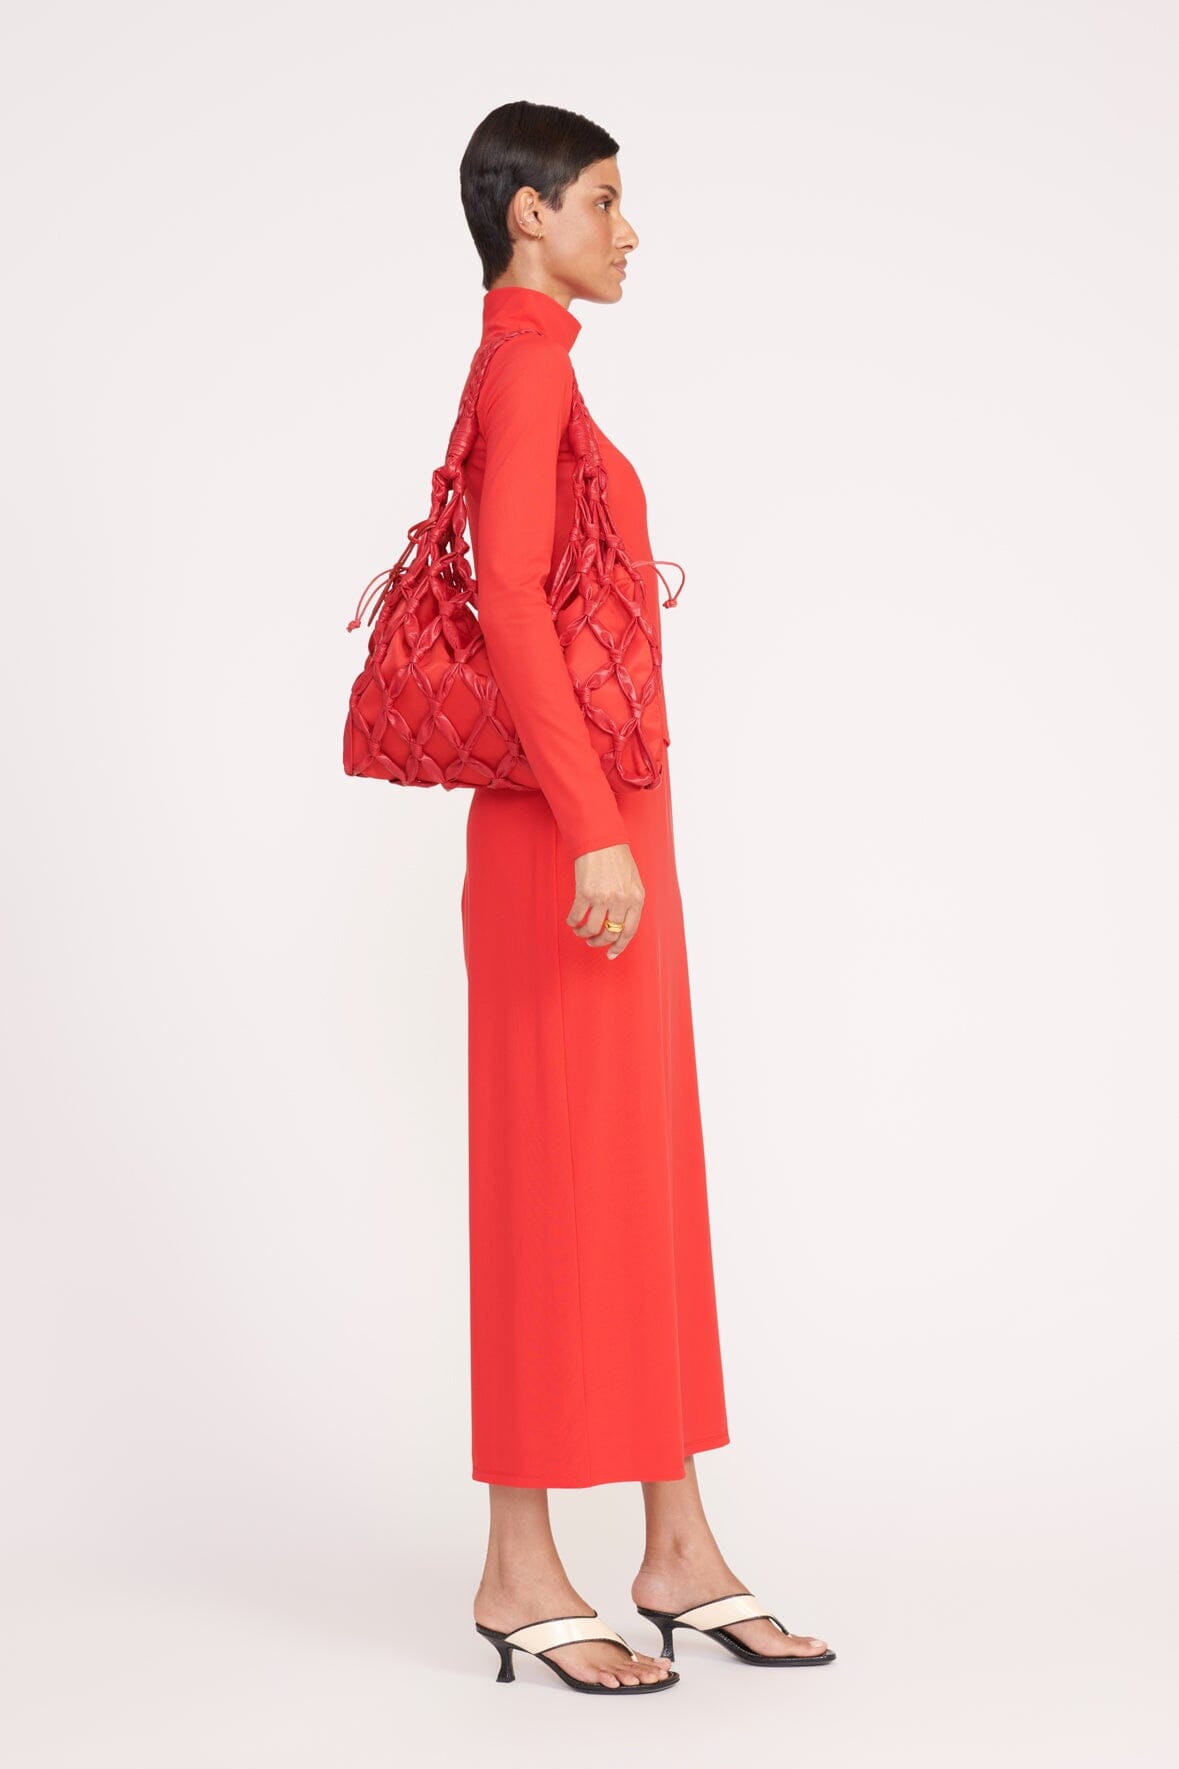 Its a red bag with diamond design zyda use nahi kiya hain - Women -  1763838511